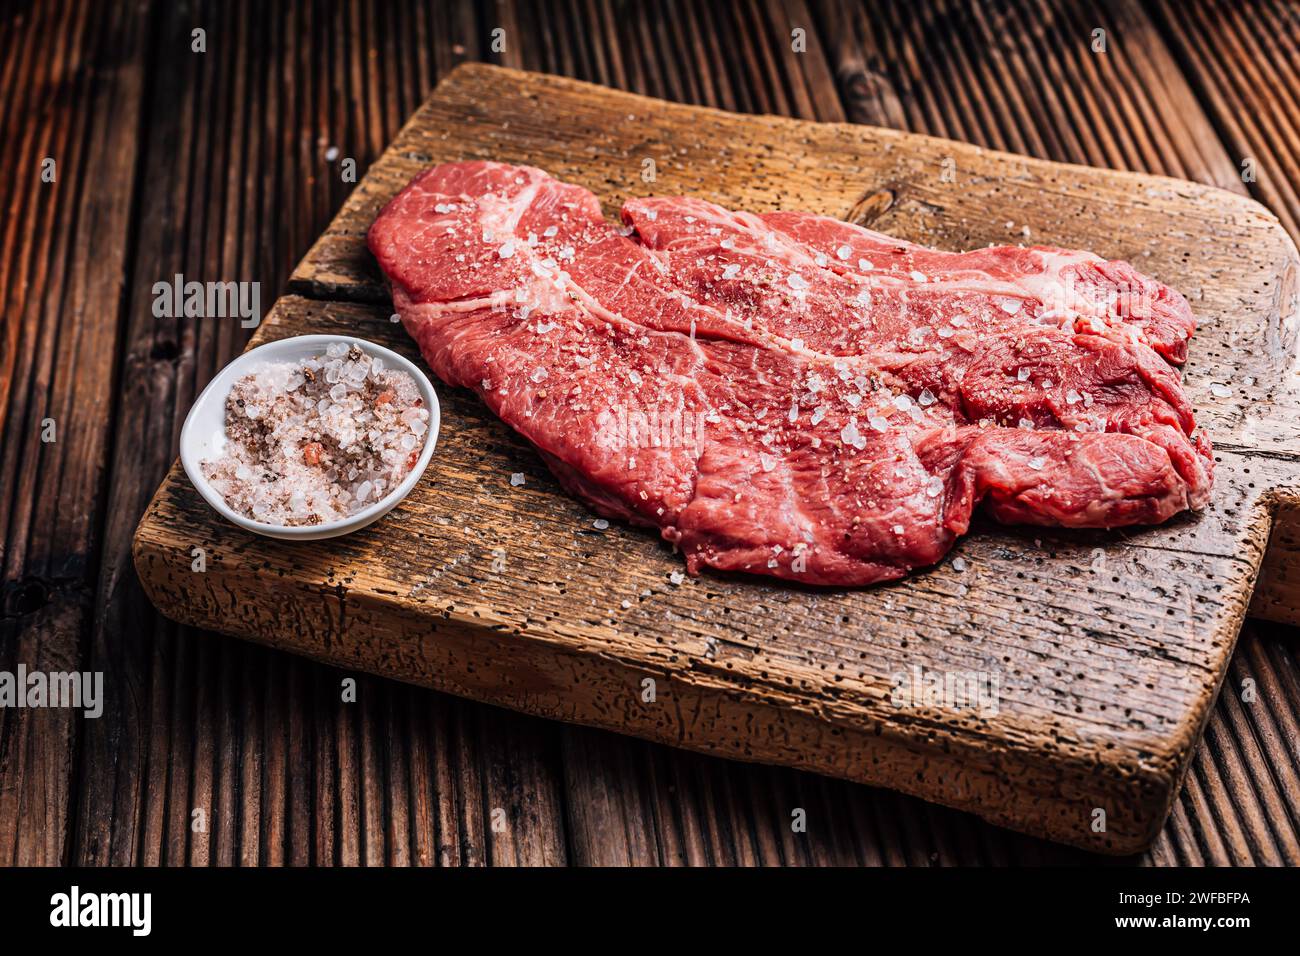 Raw Chuck eye beef steak seasoned with salt and pepper on wooden cutting board Stock Photo